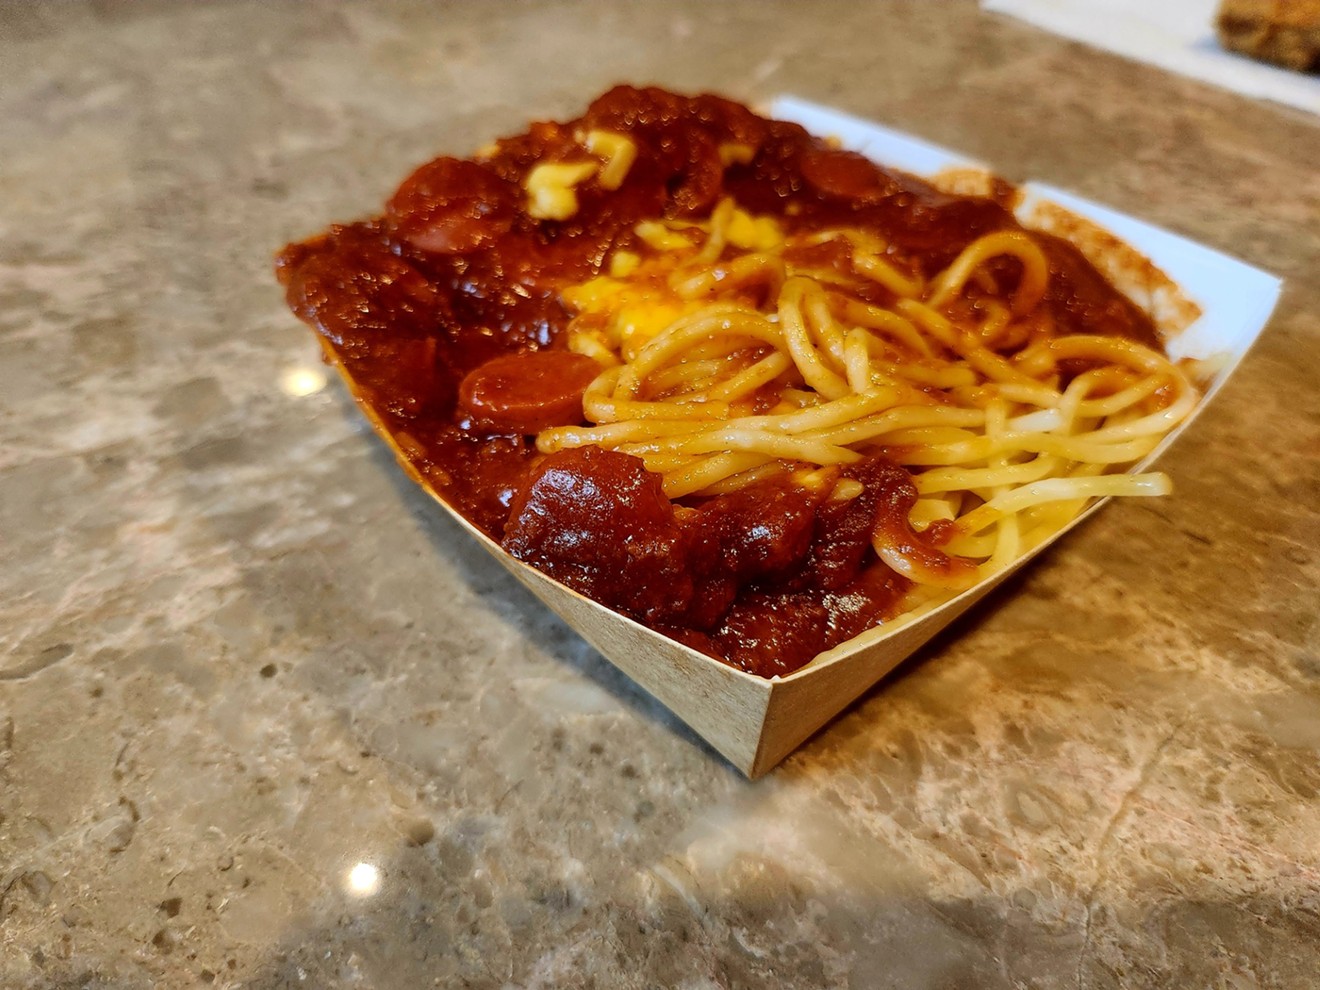 A sweet spaghetti ... with hot dog?